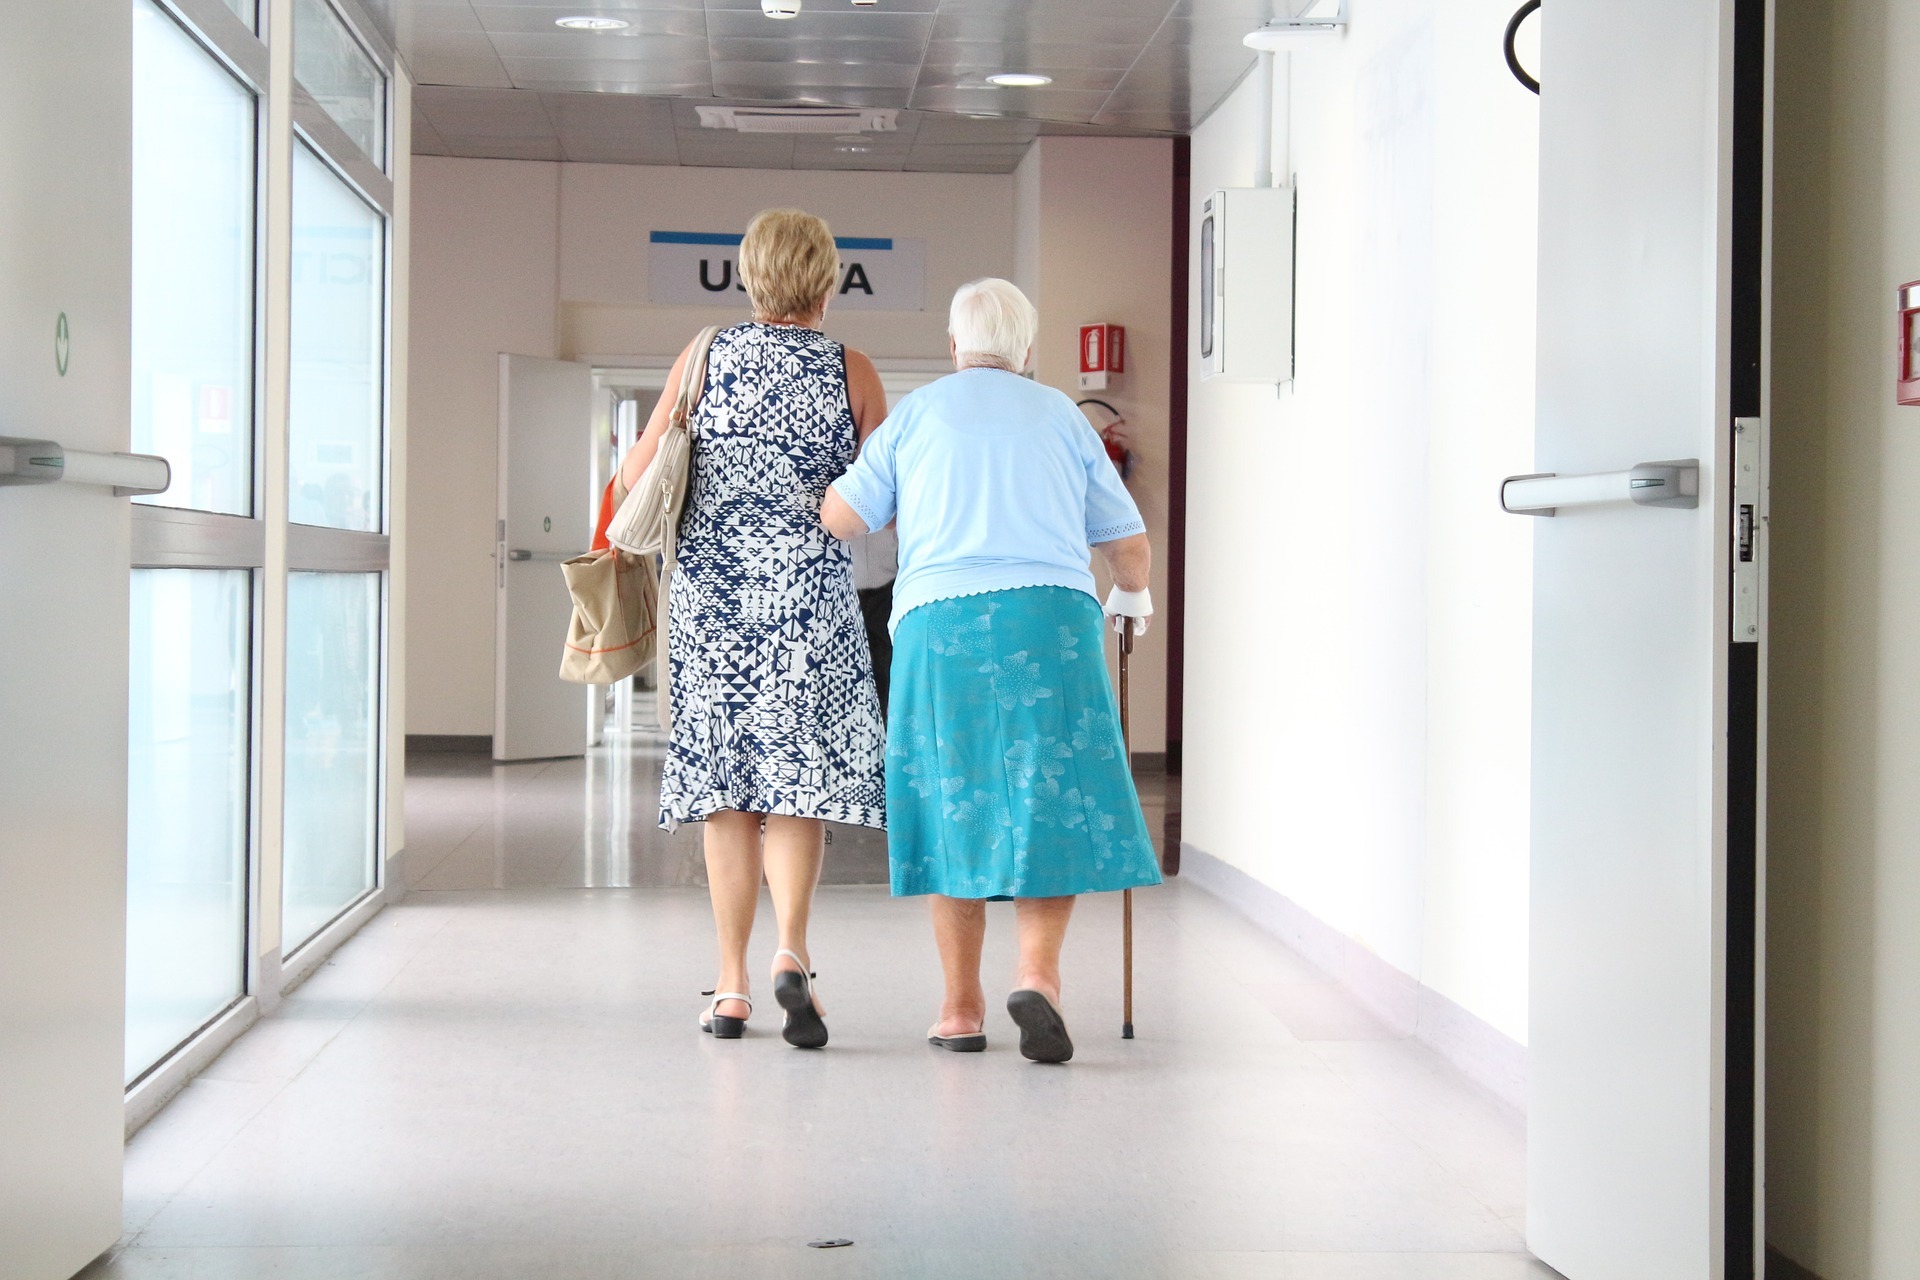 Two women walk, linking arms, down a hospital corridaor 